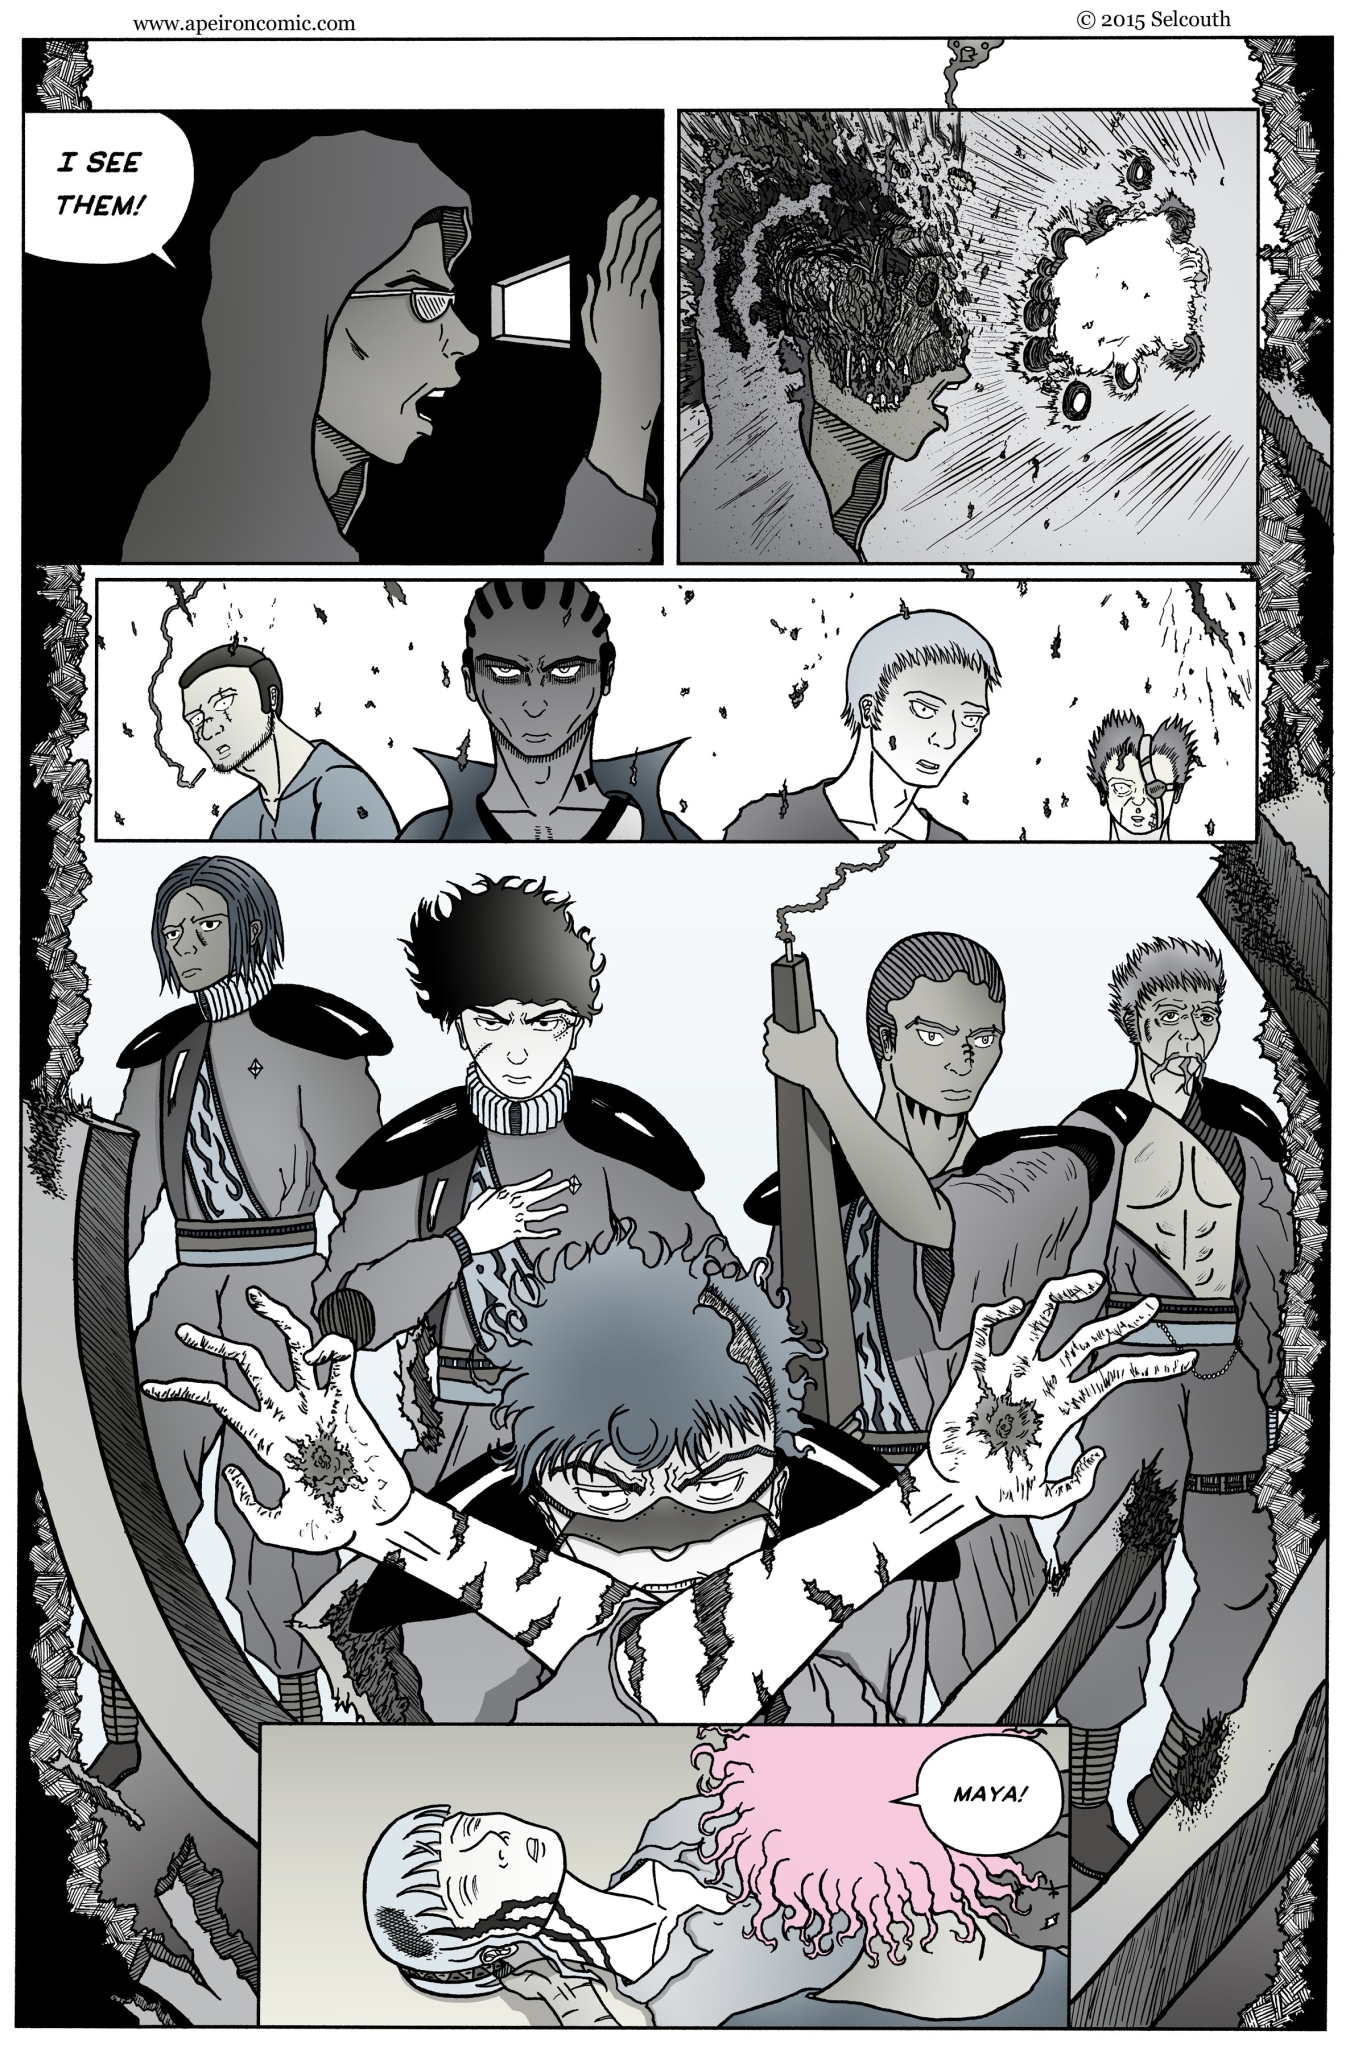 Apeiron Comic: Chapter 02 Page 45